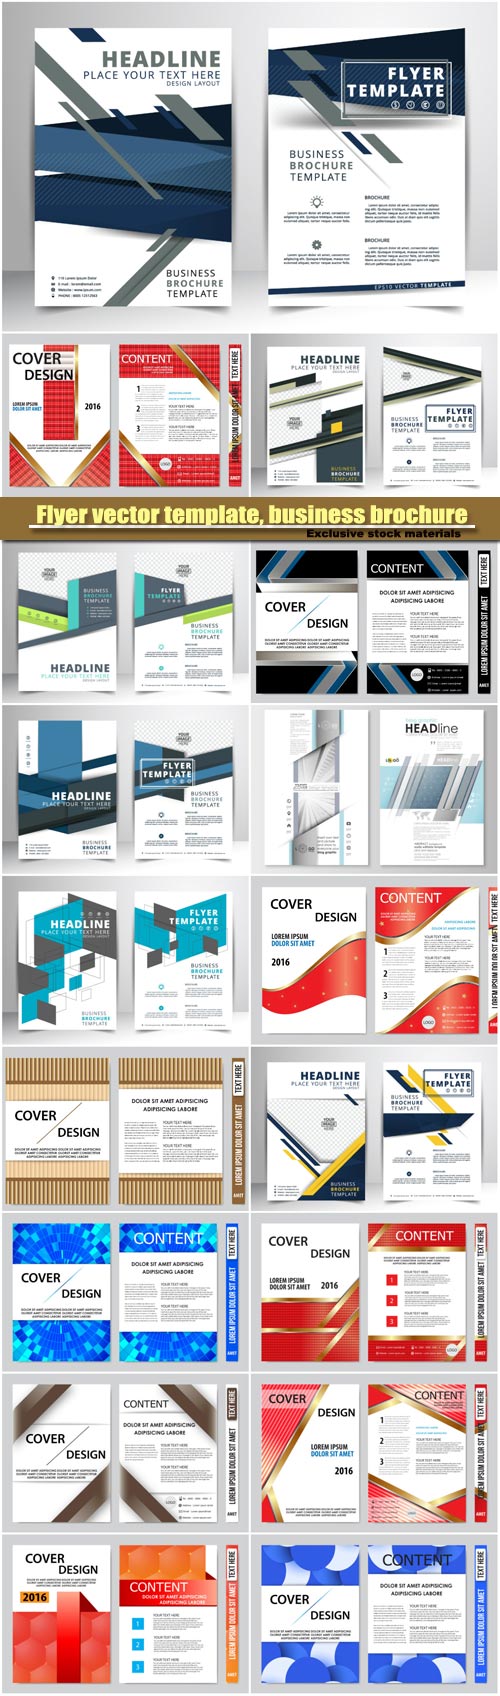 Flyer vector template, business brochure